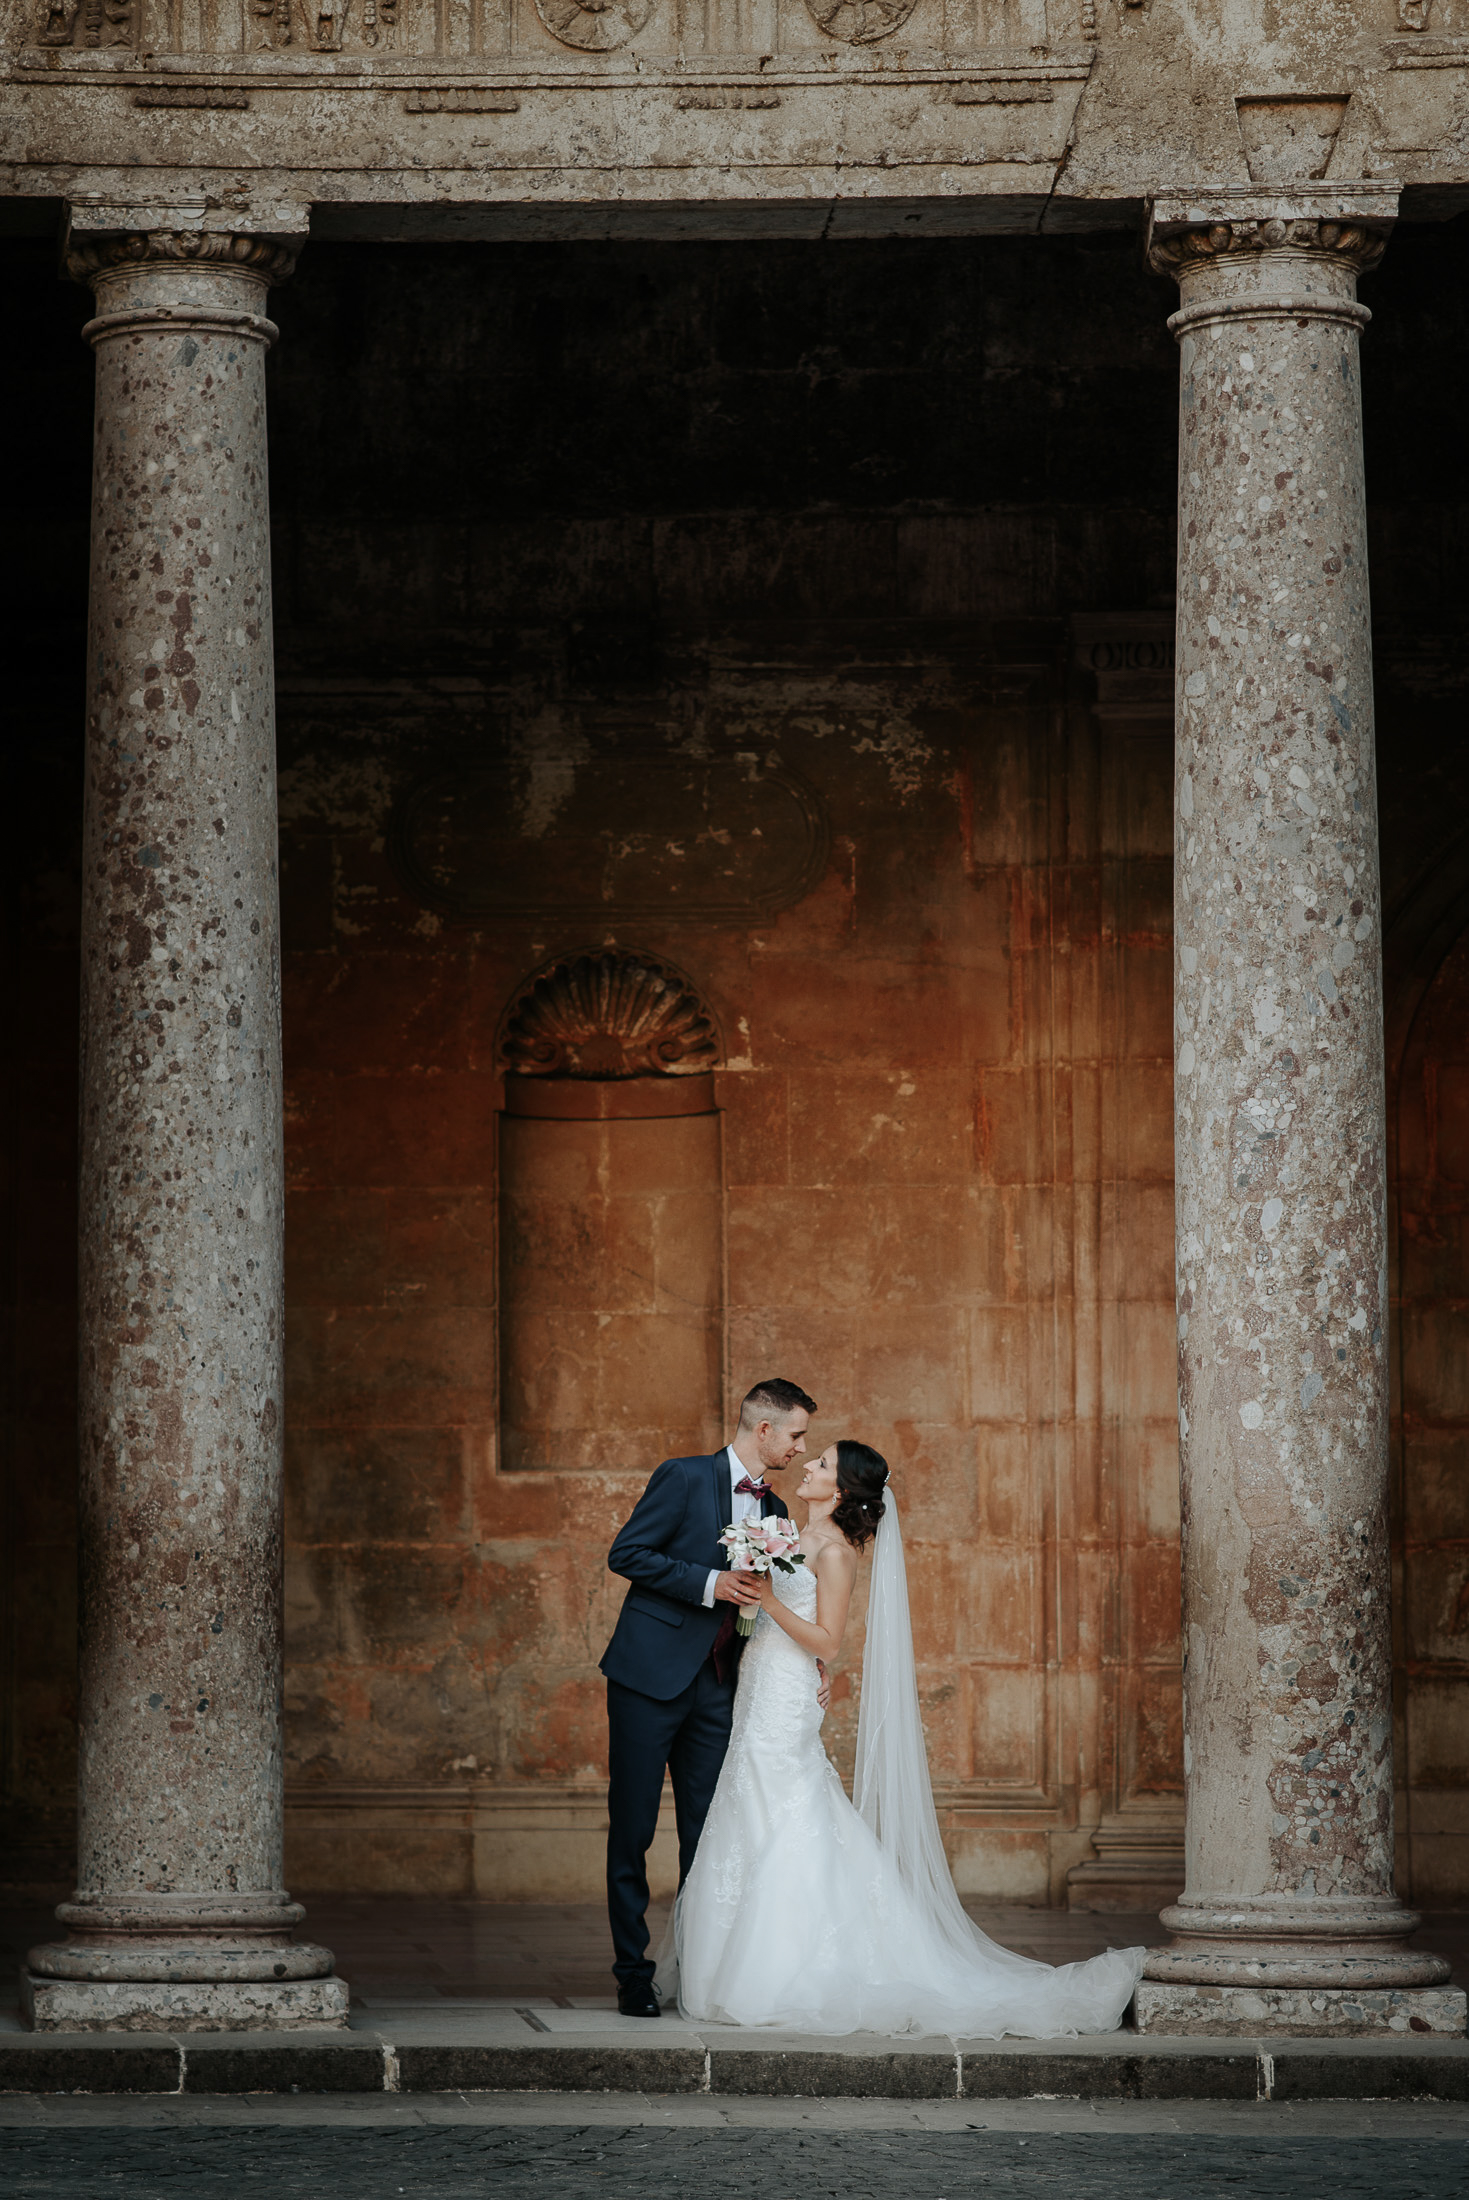 Post boda en Alhambra